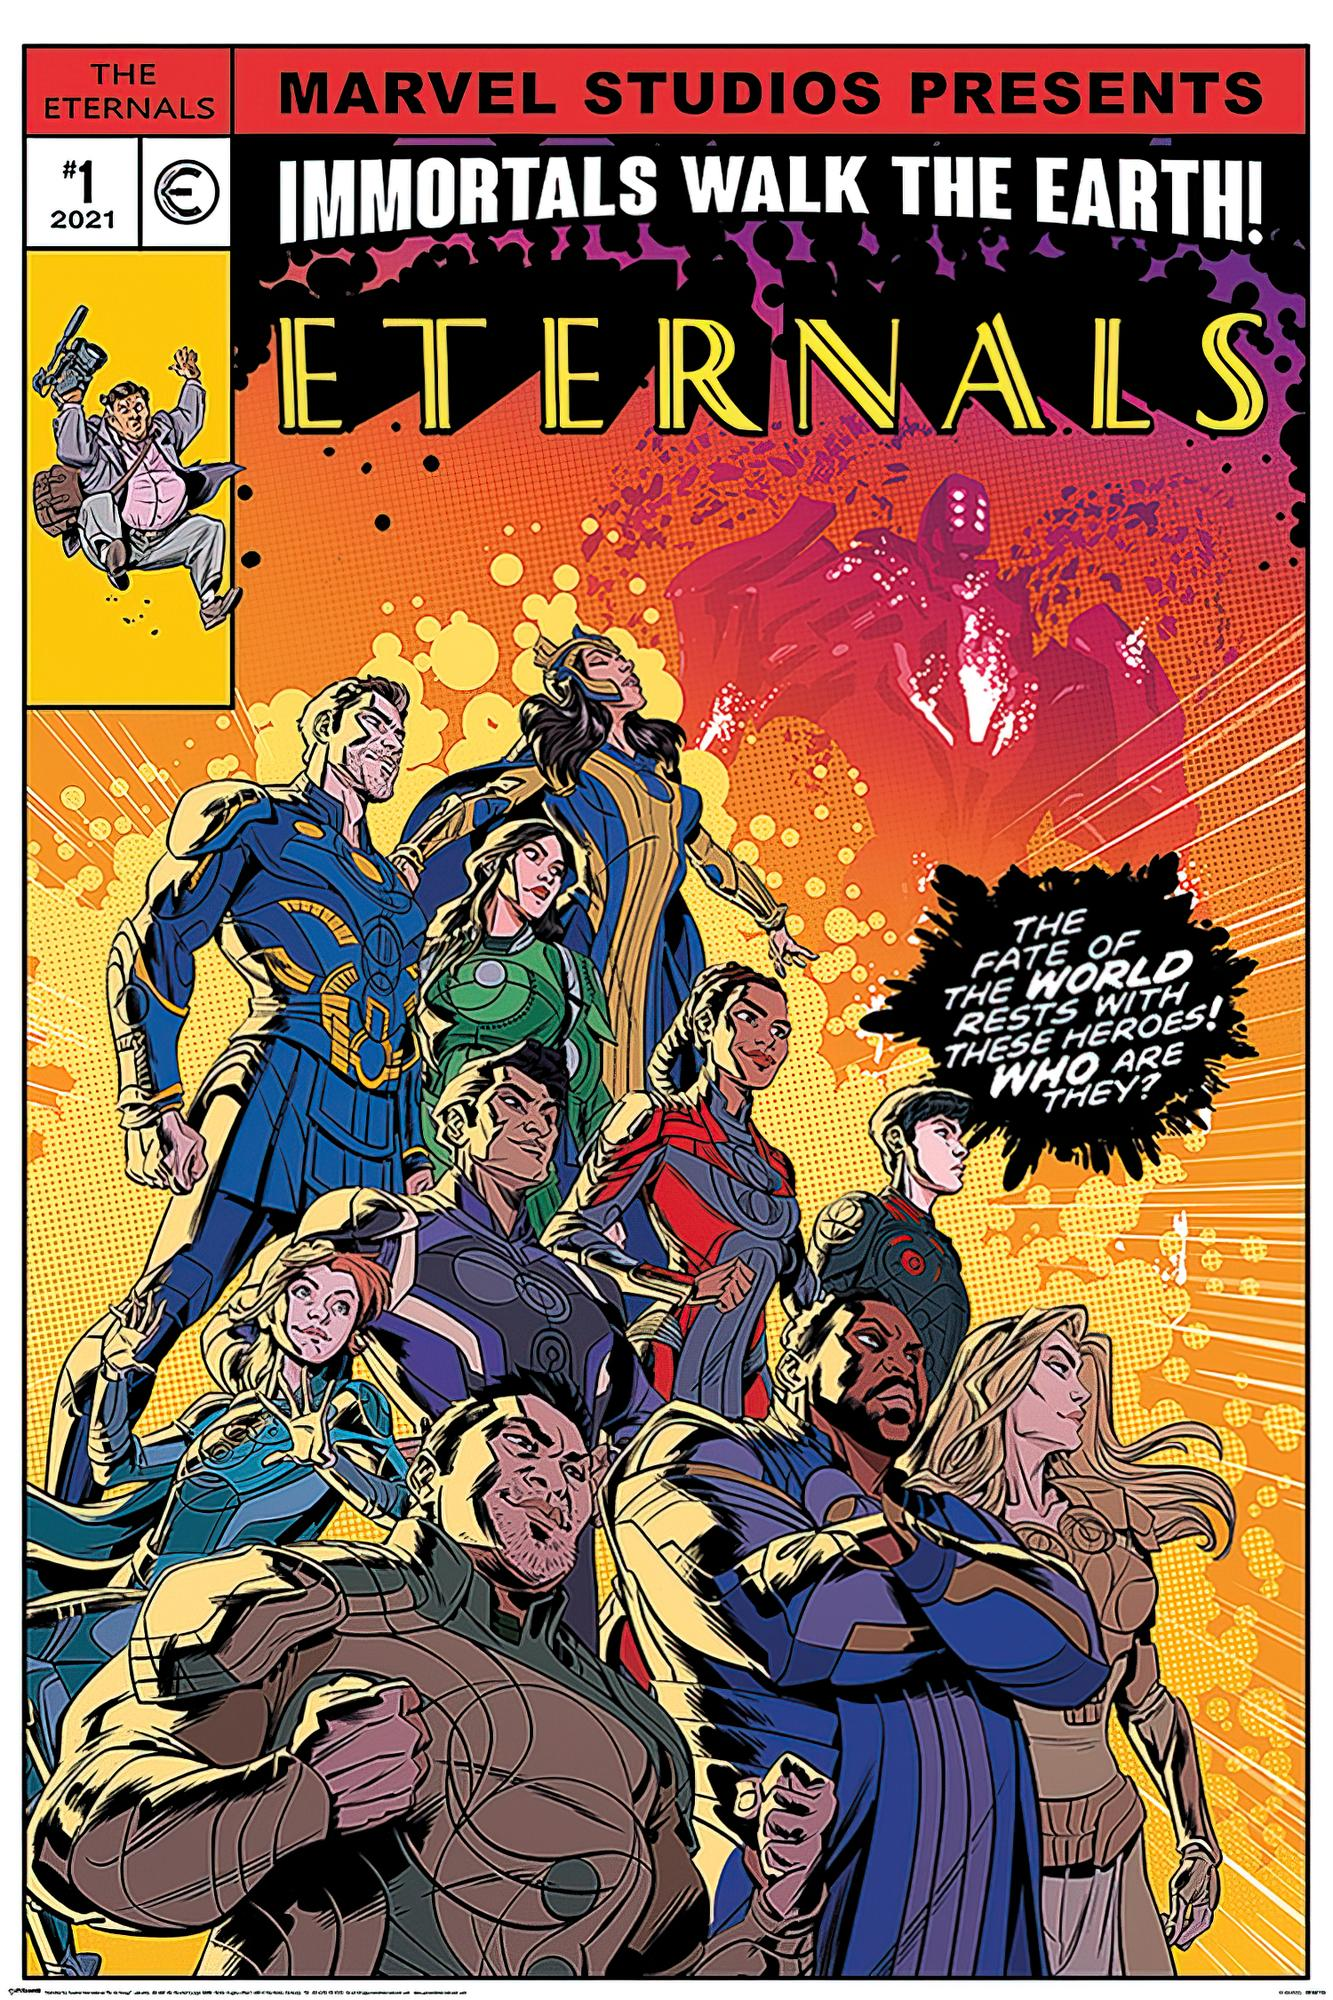 PYRAMID INTERNATIONAL Poster Eternals Poster Earth Walk Comic Marvel the Immortals